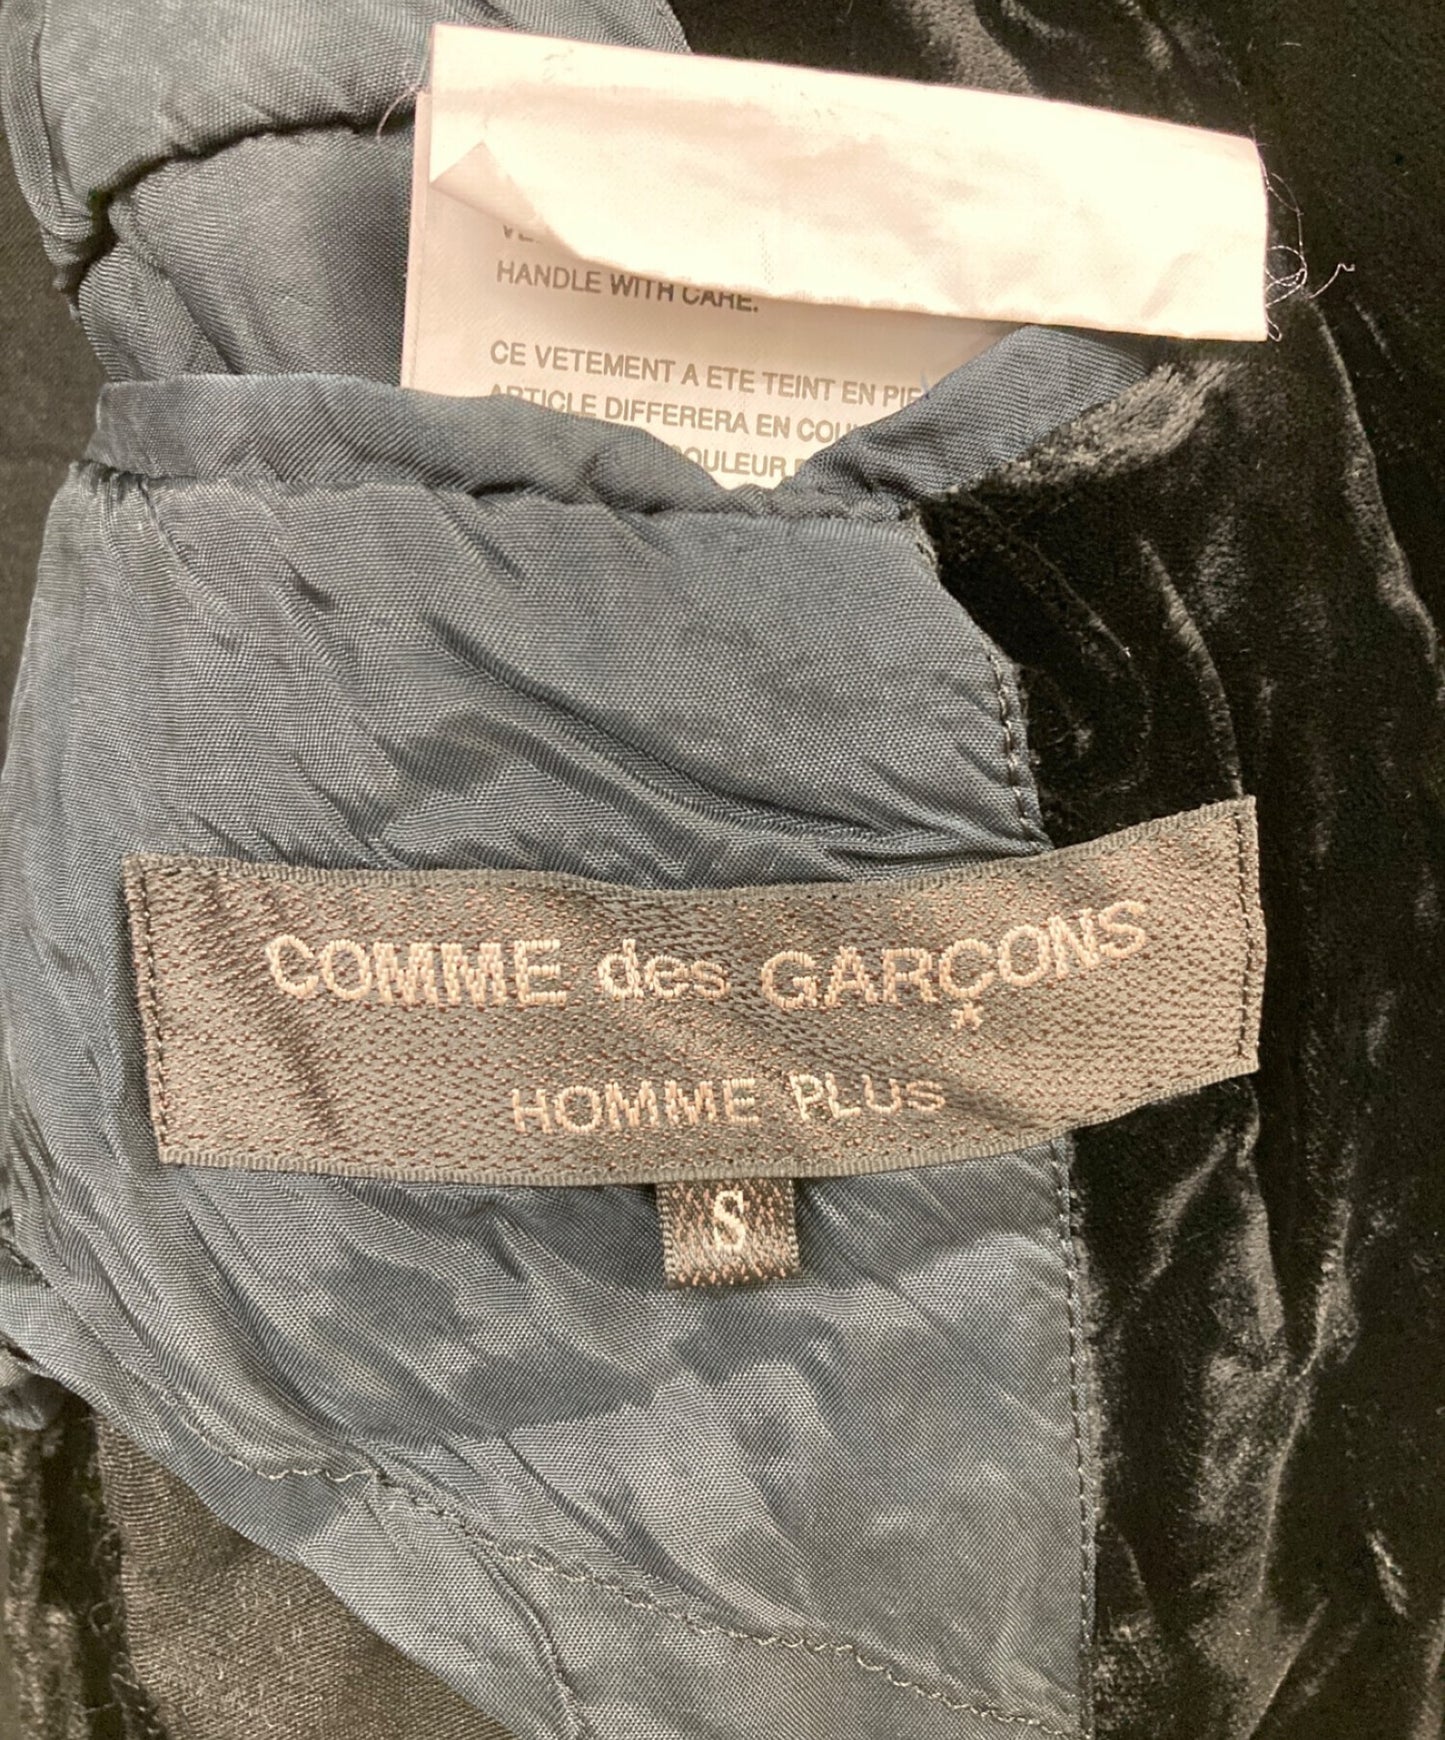 Comme des Garcons Homme Plus Ted的天鹅绒夹克/1B夹克PO-J083